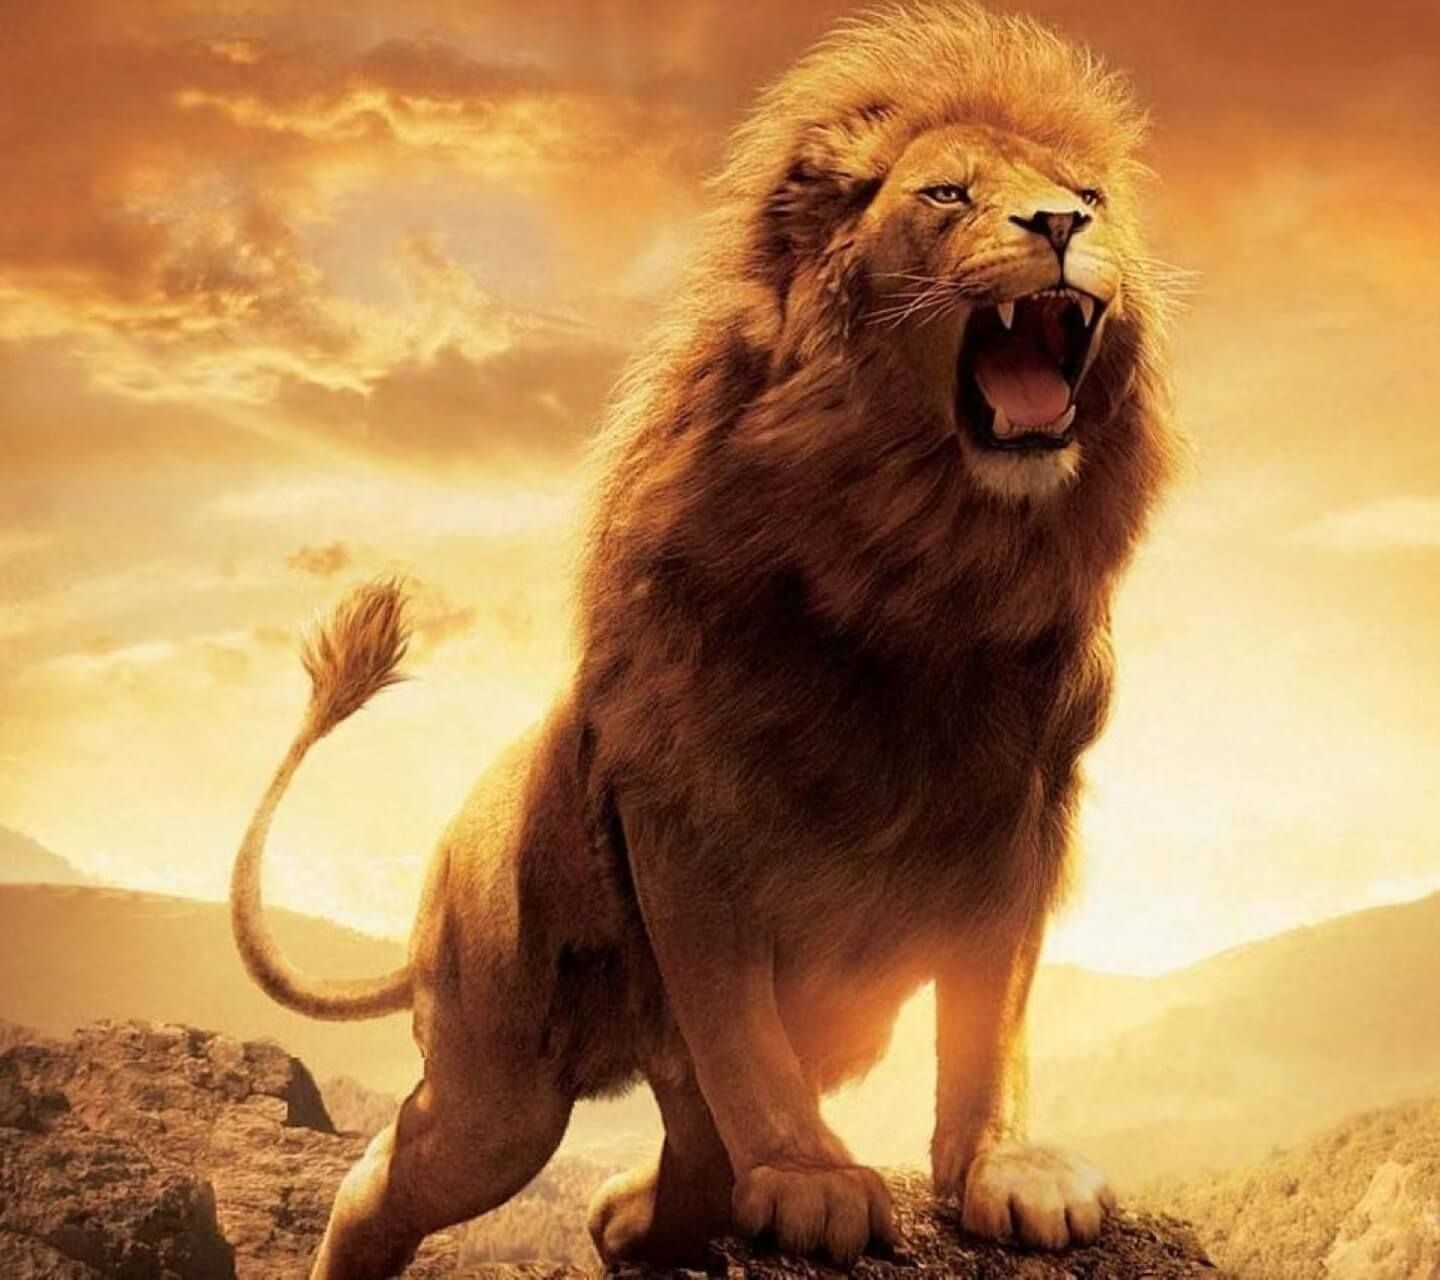 Roaring Lion Wallpaper Hd 1080p - Lion Images Hd Download - 1440x1280  Wallpaper 